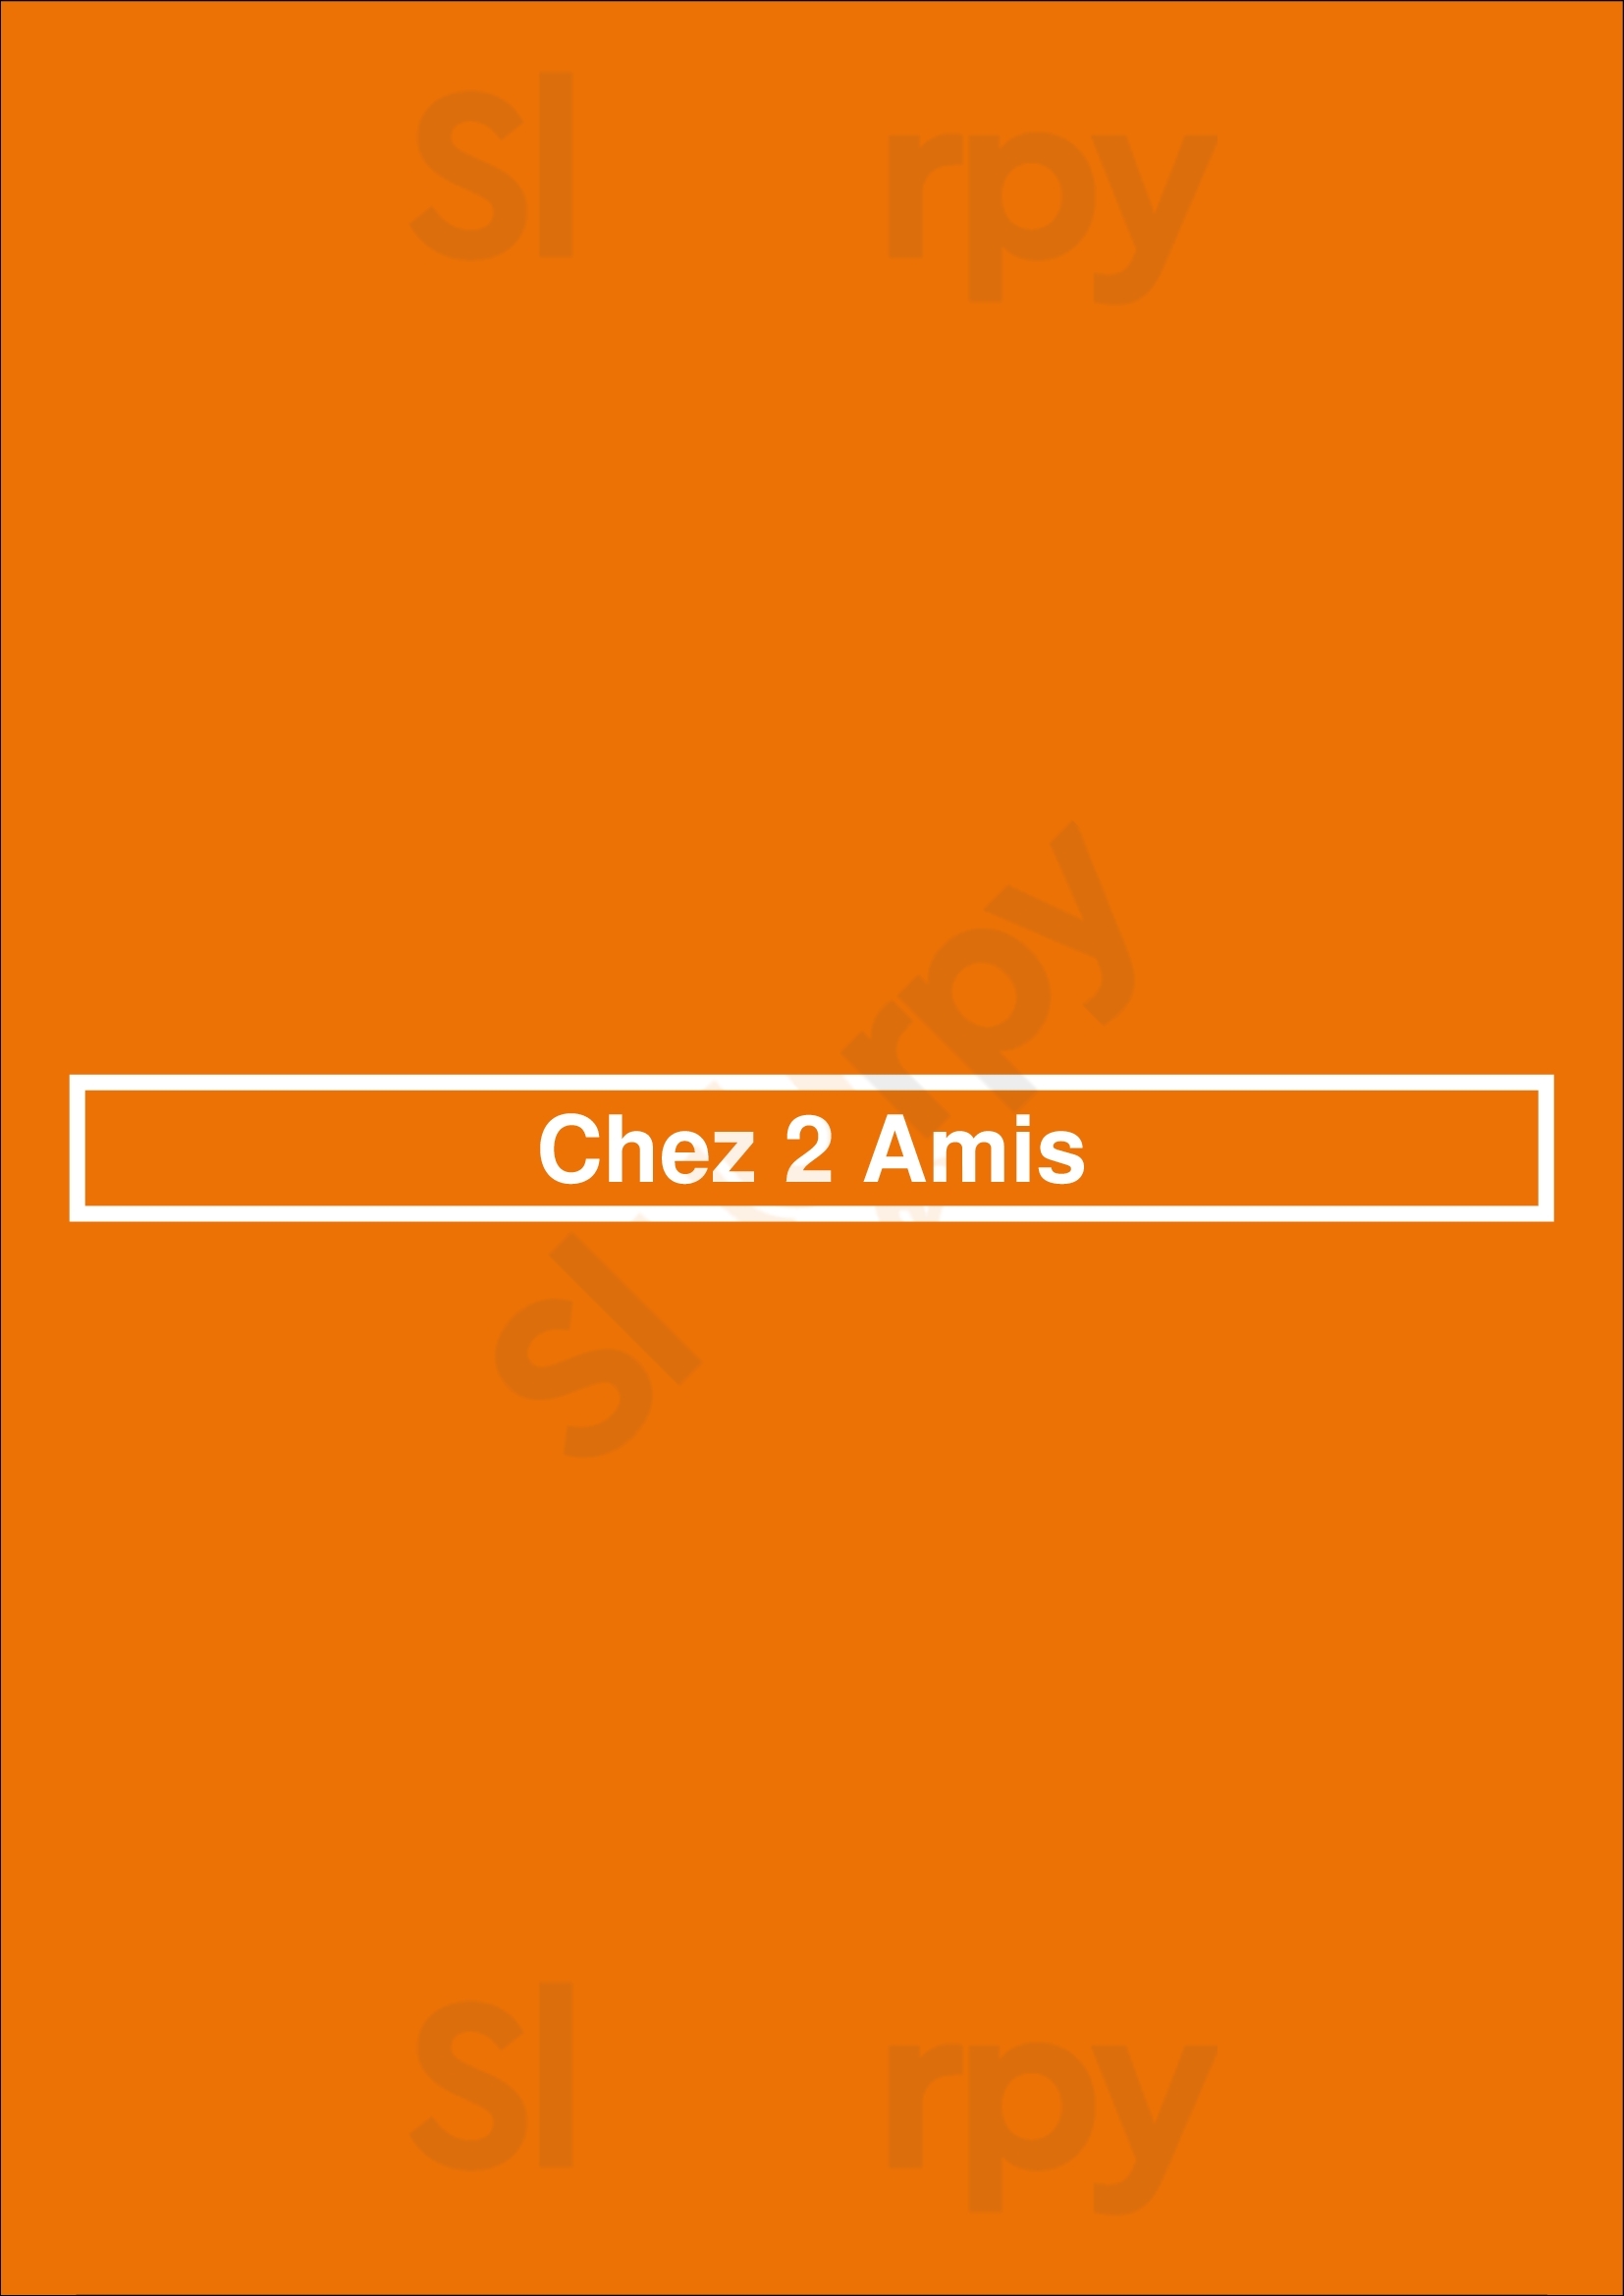 Chez 2 Amis Strasbourg Menu - 1